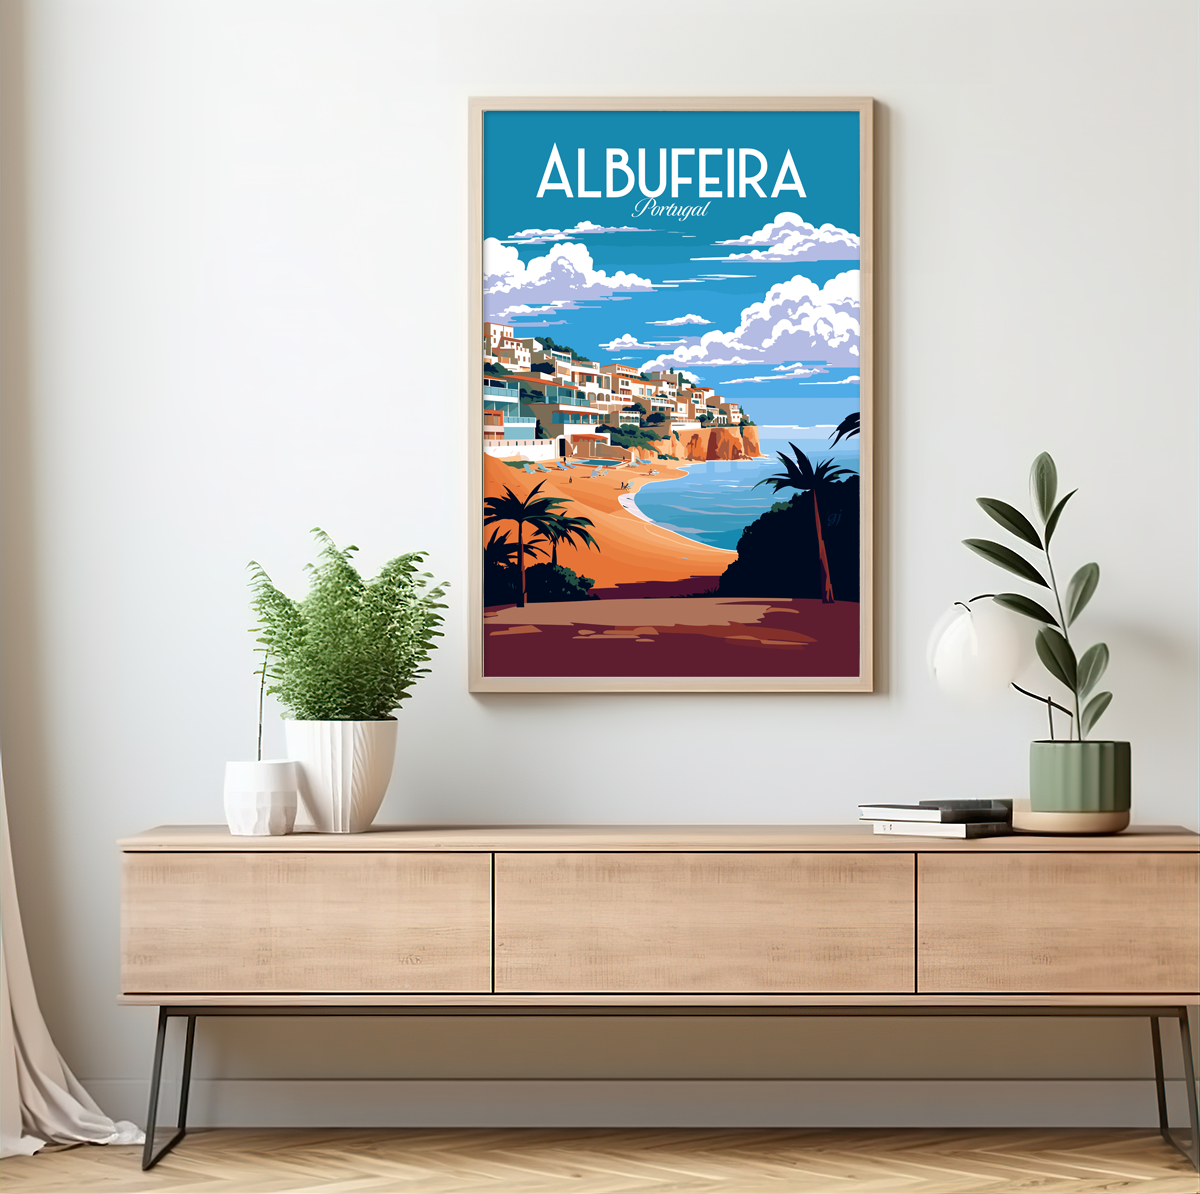 Albufeira poster by bon voyage design